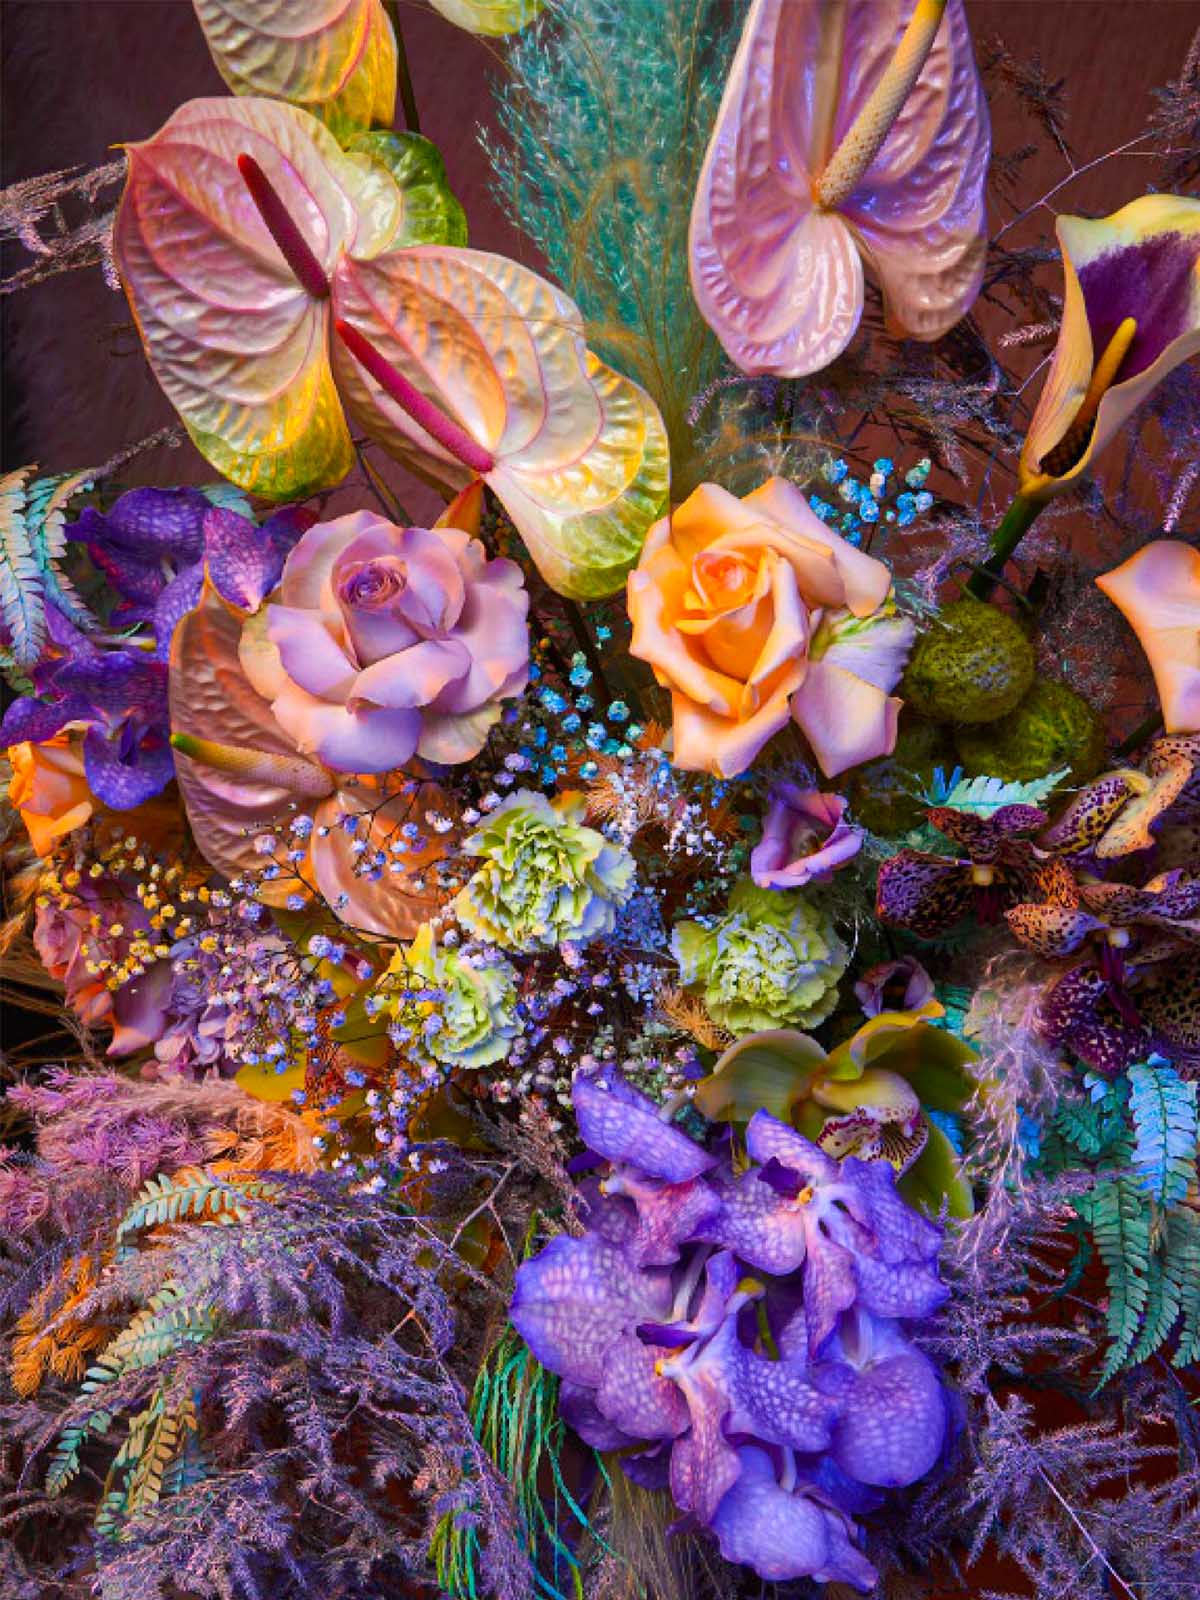 Artistic interpretations using colorful dried flowers on Thursd